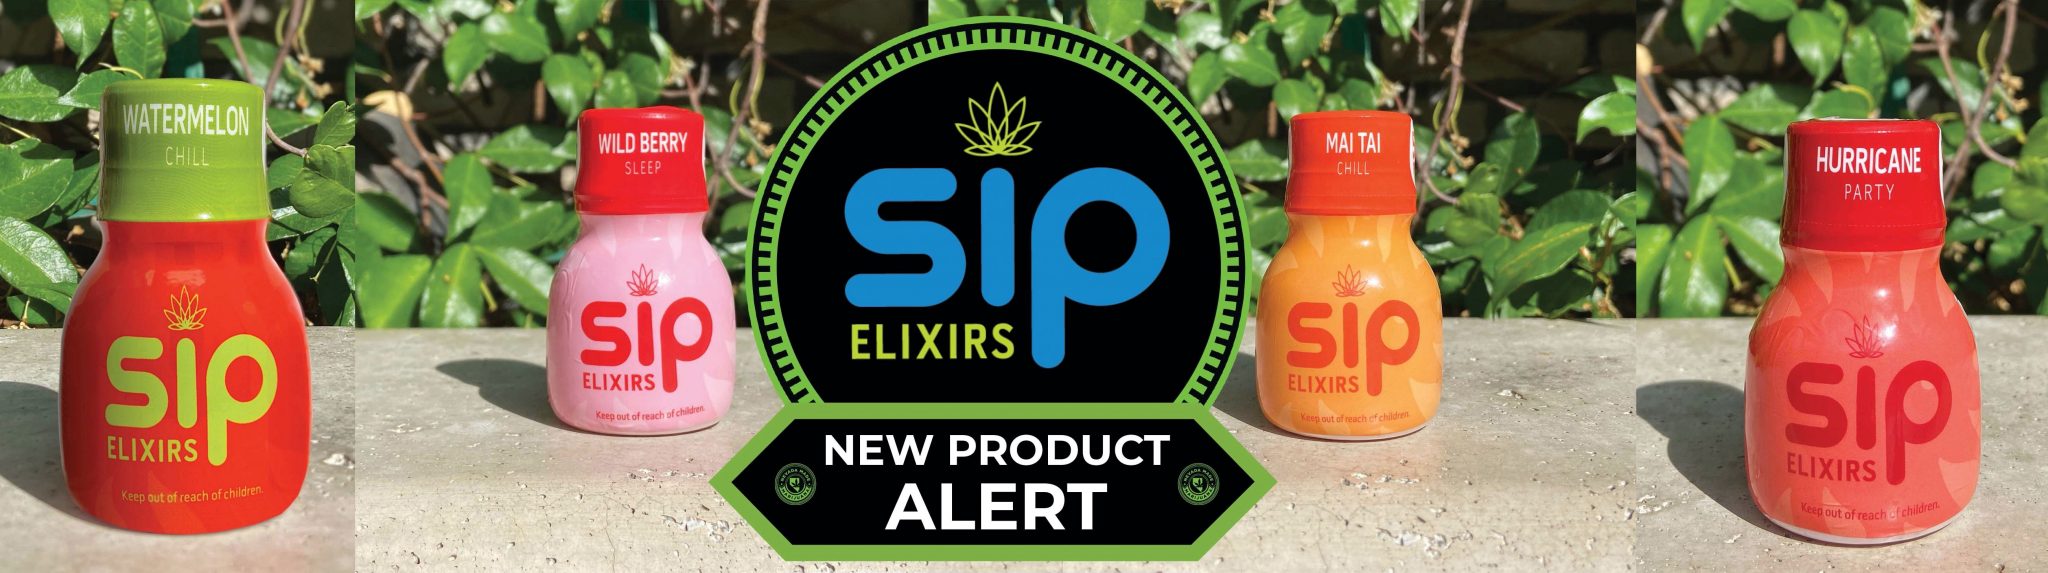 Three Ways To Enjoy A Sip Elixir - Las Vegas Dispensary | Nevada Made